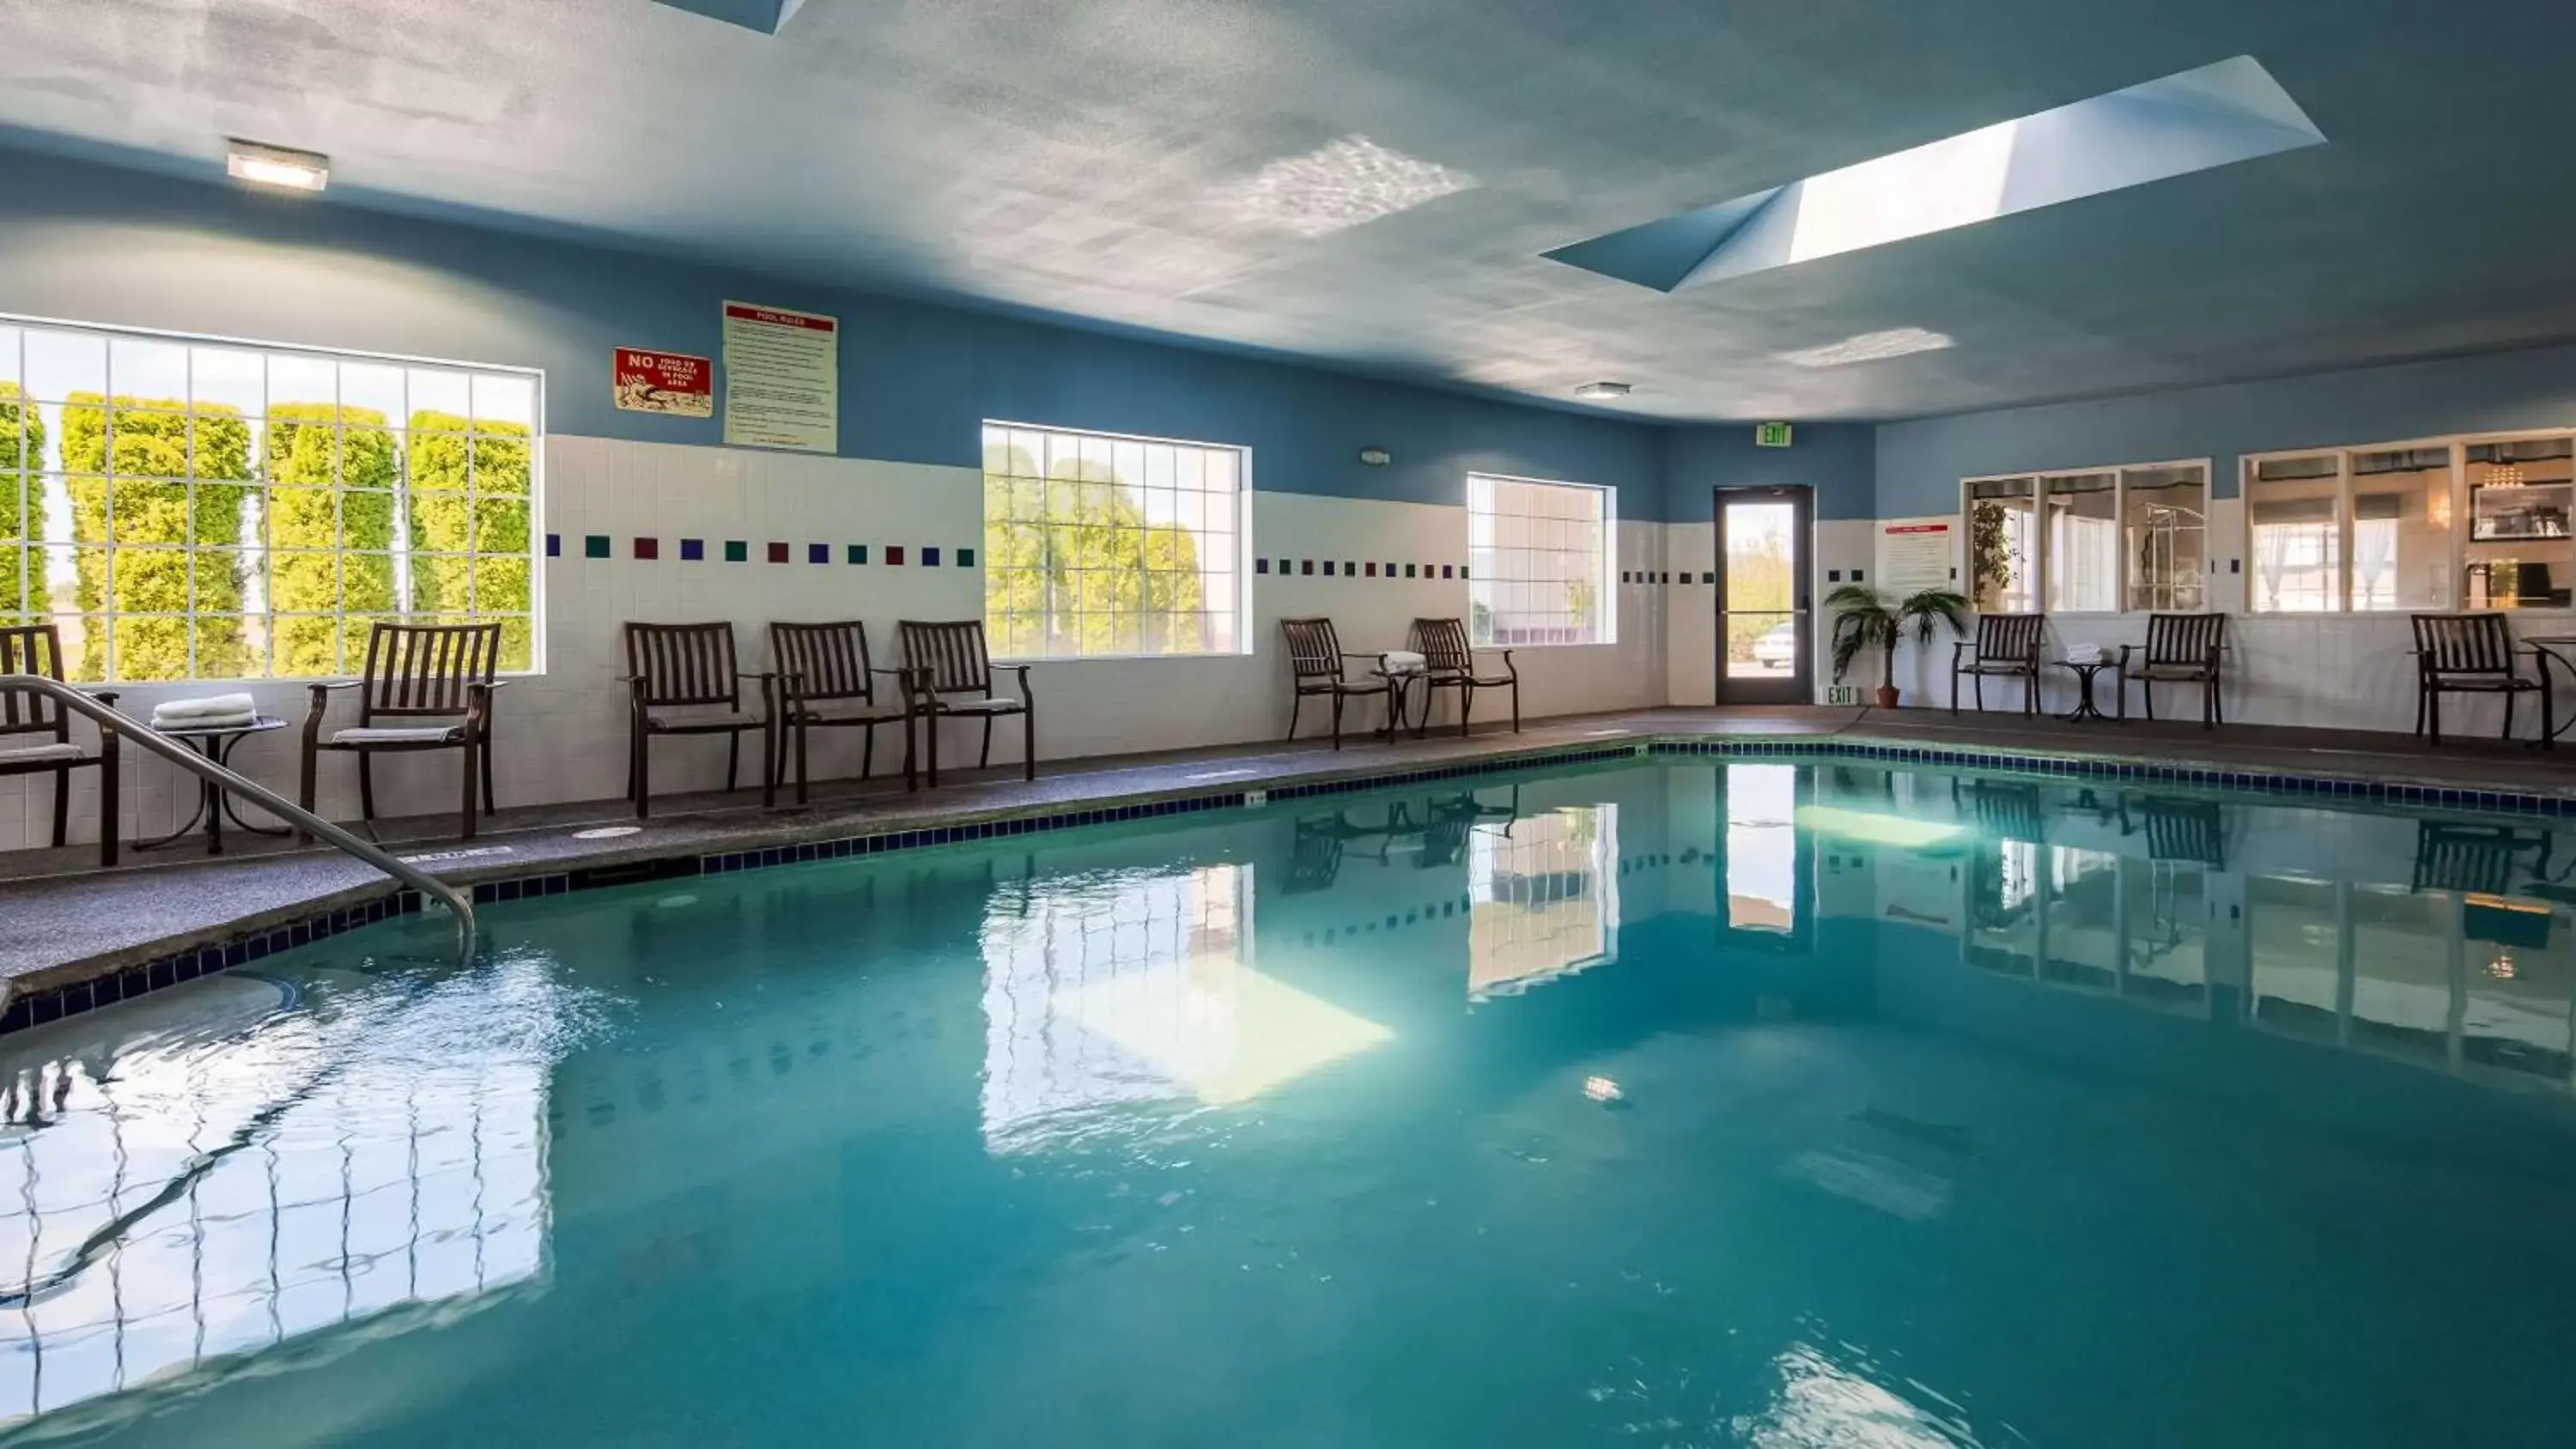 On site, Swimming Pool in Best Western Plus Liberty Lake Inn